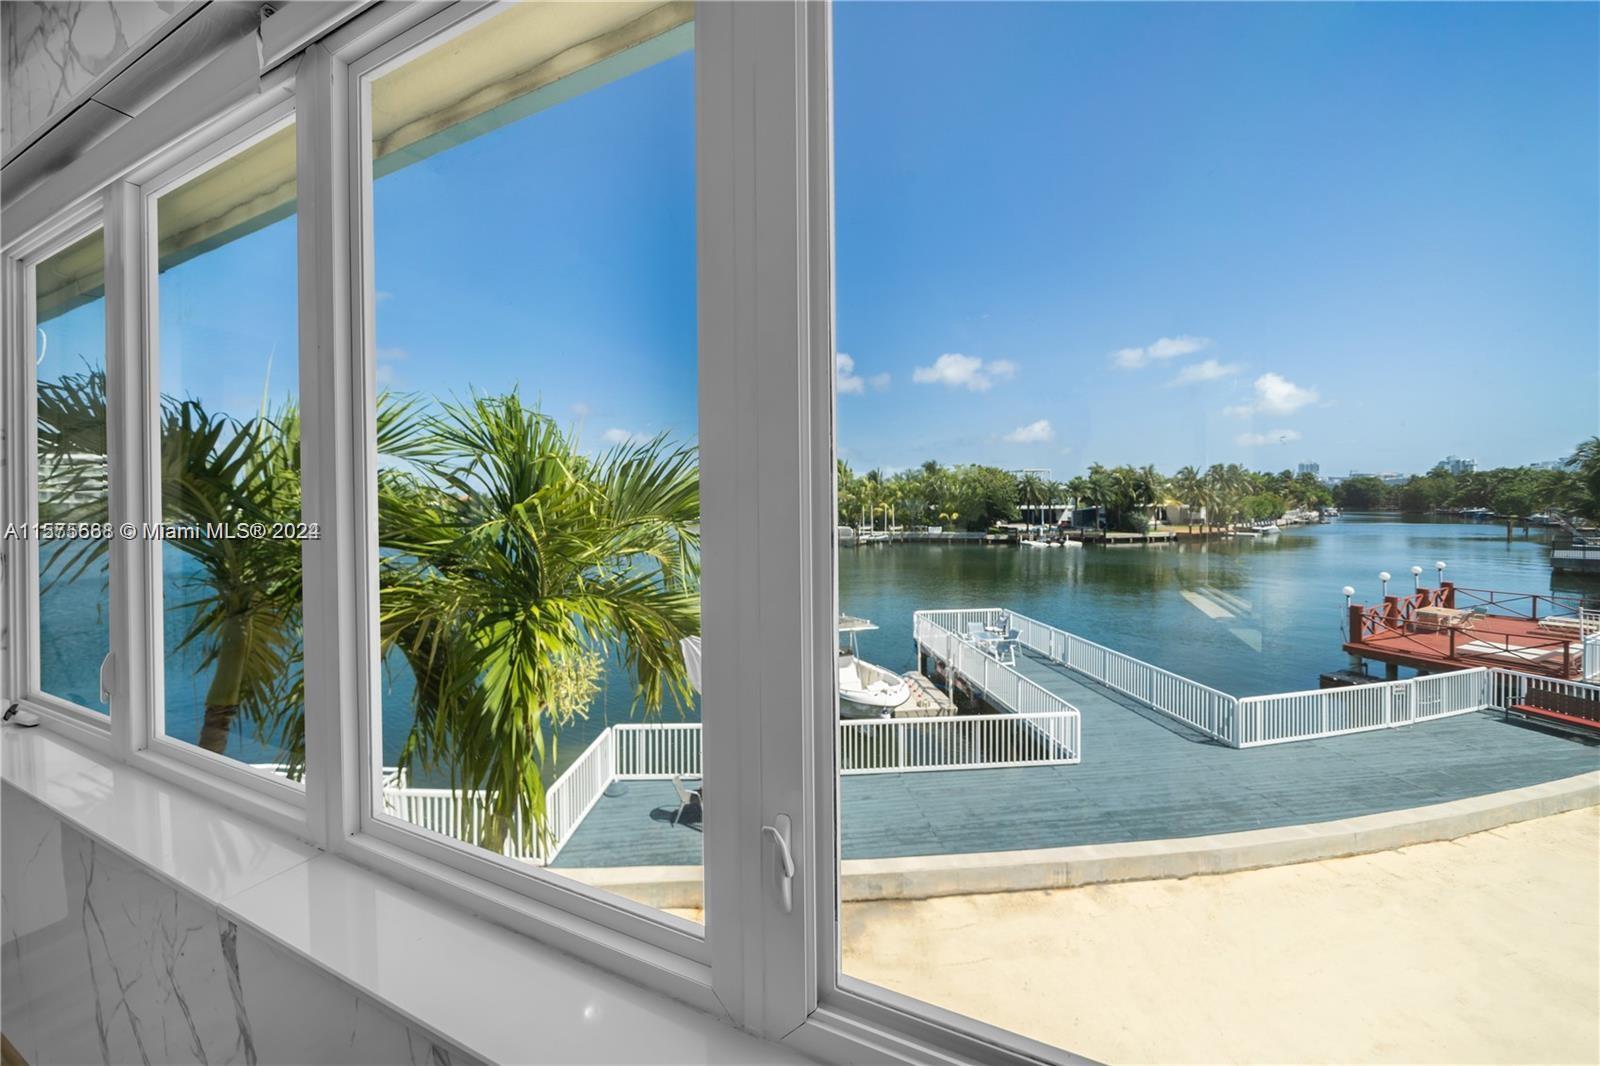 Rental Property at 4710 Pine Tree Dr 49, Miami Beach, Miami-Dade County, Florida - Bedrooms: 2 
Bathrooms: 2  - $3,800 MO.